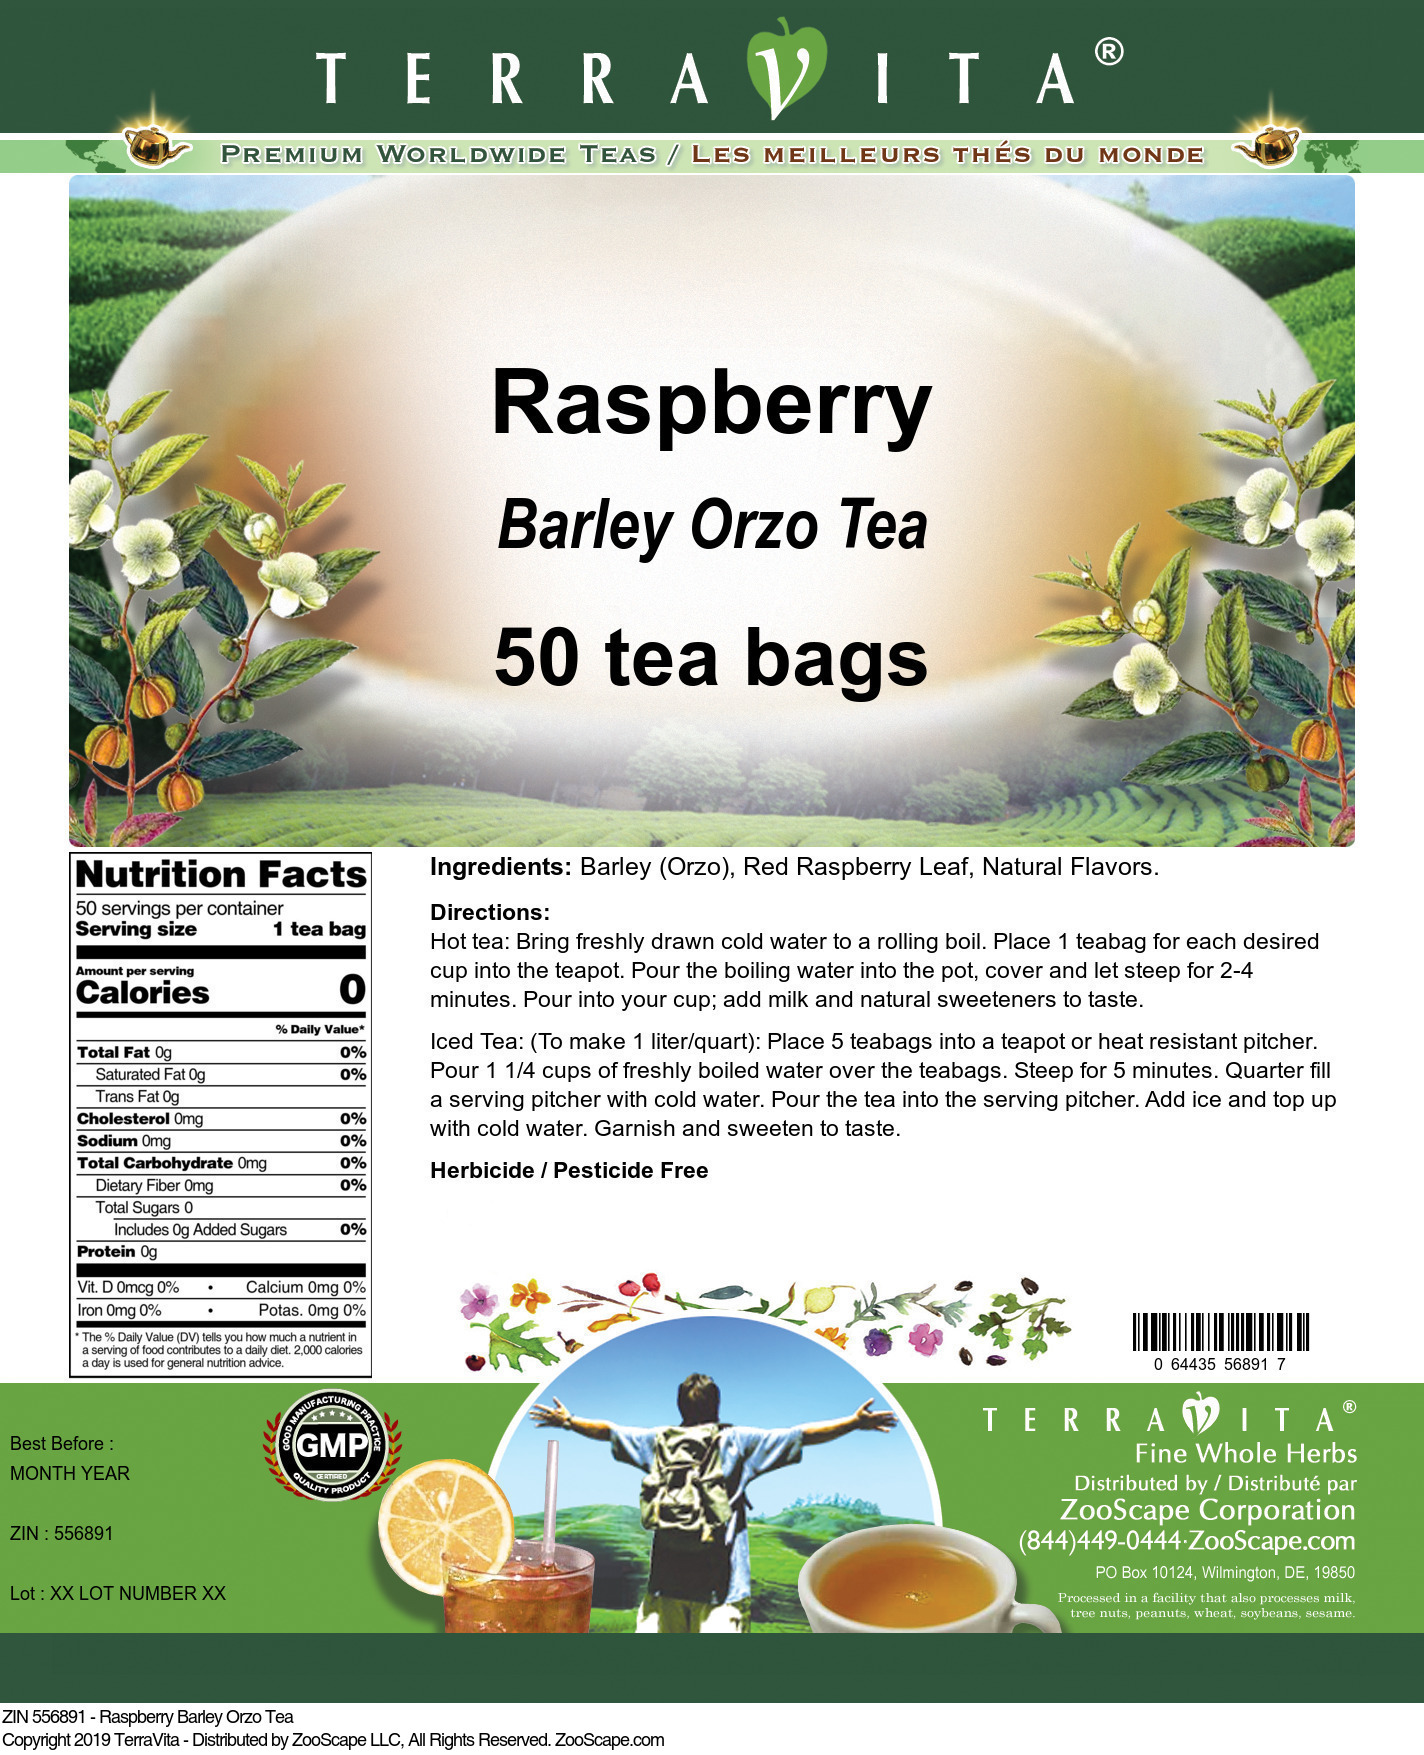 Raspberry Barley Orzo Tea - Label